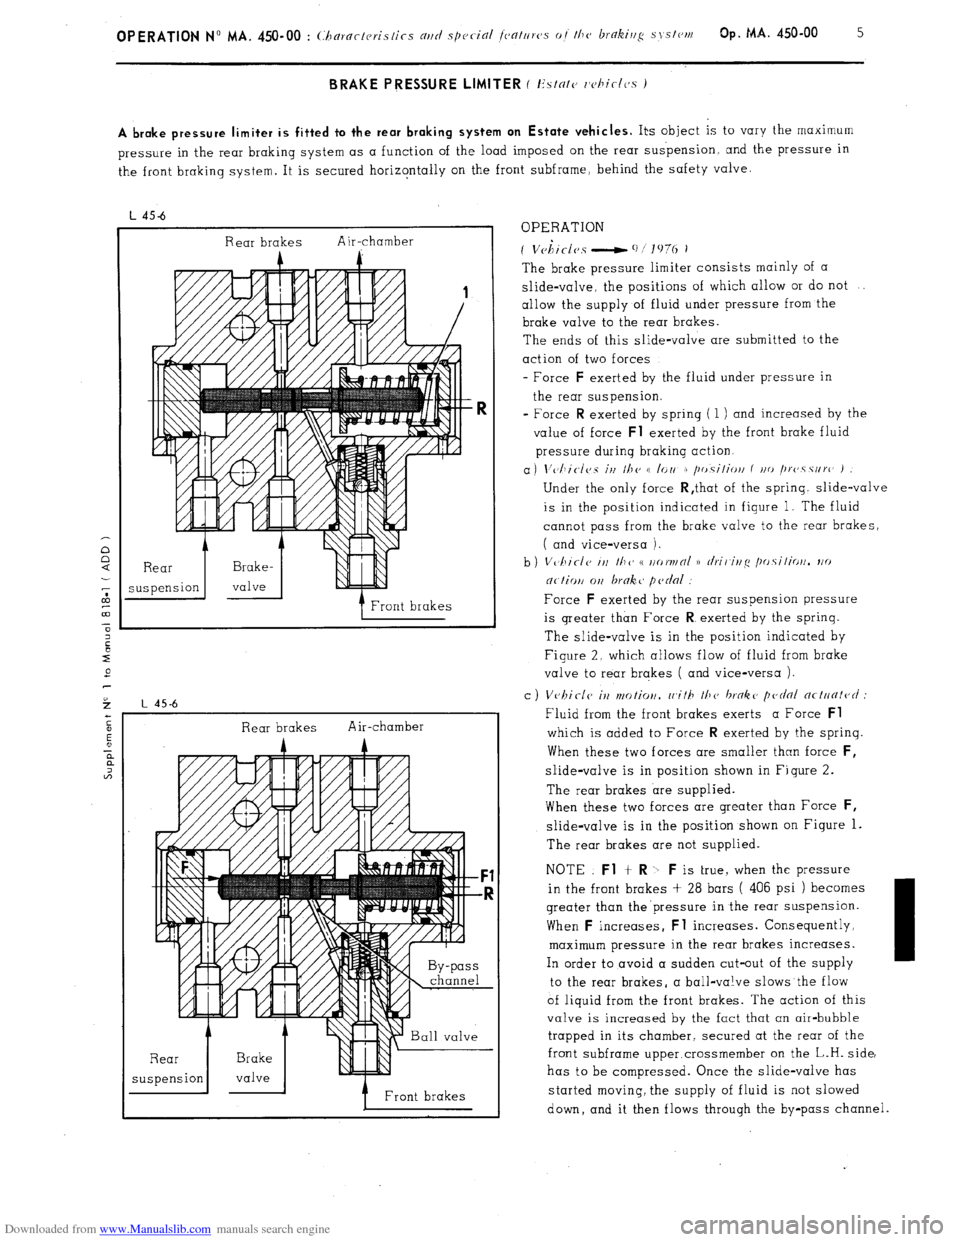 Citroen CX 1979 1.G Workshop Manual Downloaded from www.Manualslib.com manuals search engine OPERATION No MA. 450-00 : Ch nrnclcrislics ortd sp~~c-i~l (c~c~trlrc>s 01 the hokiug S SI~IN Op. MA. 450.00 5 
A brake pressure limiter is fitt